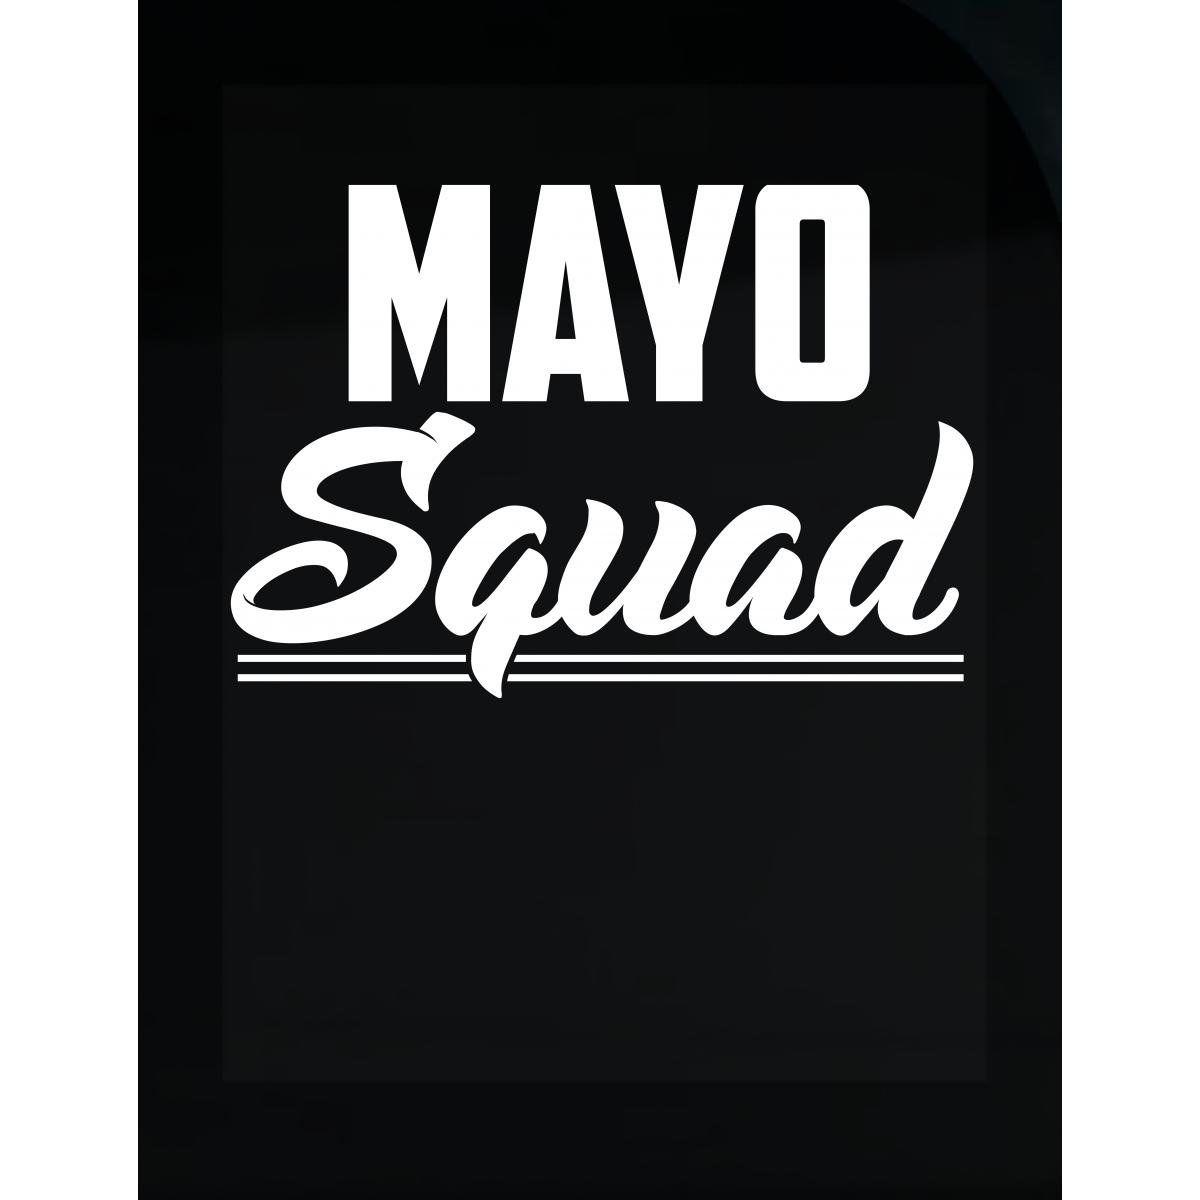 SAV Squad Logo - Amazon.com: Mayo Squad - Sticker: Home & Kitchen